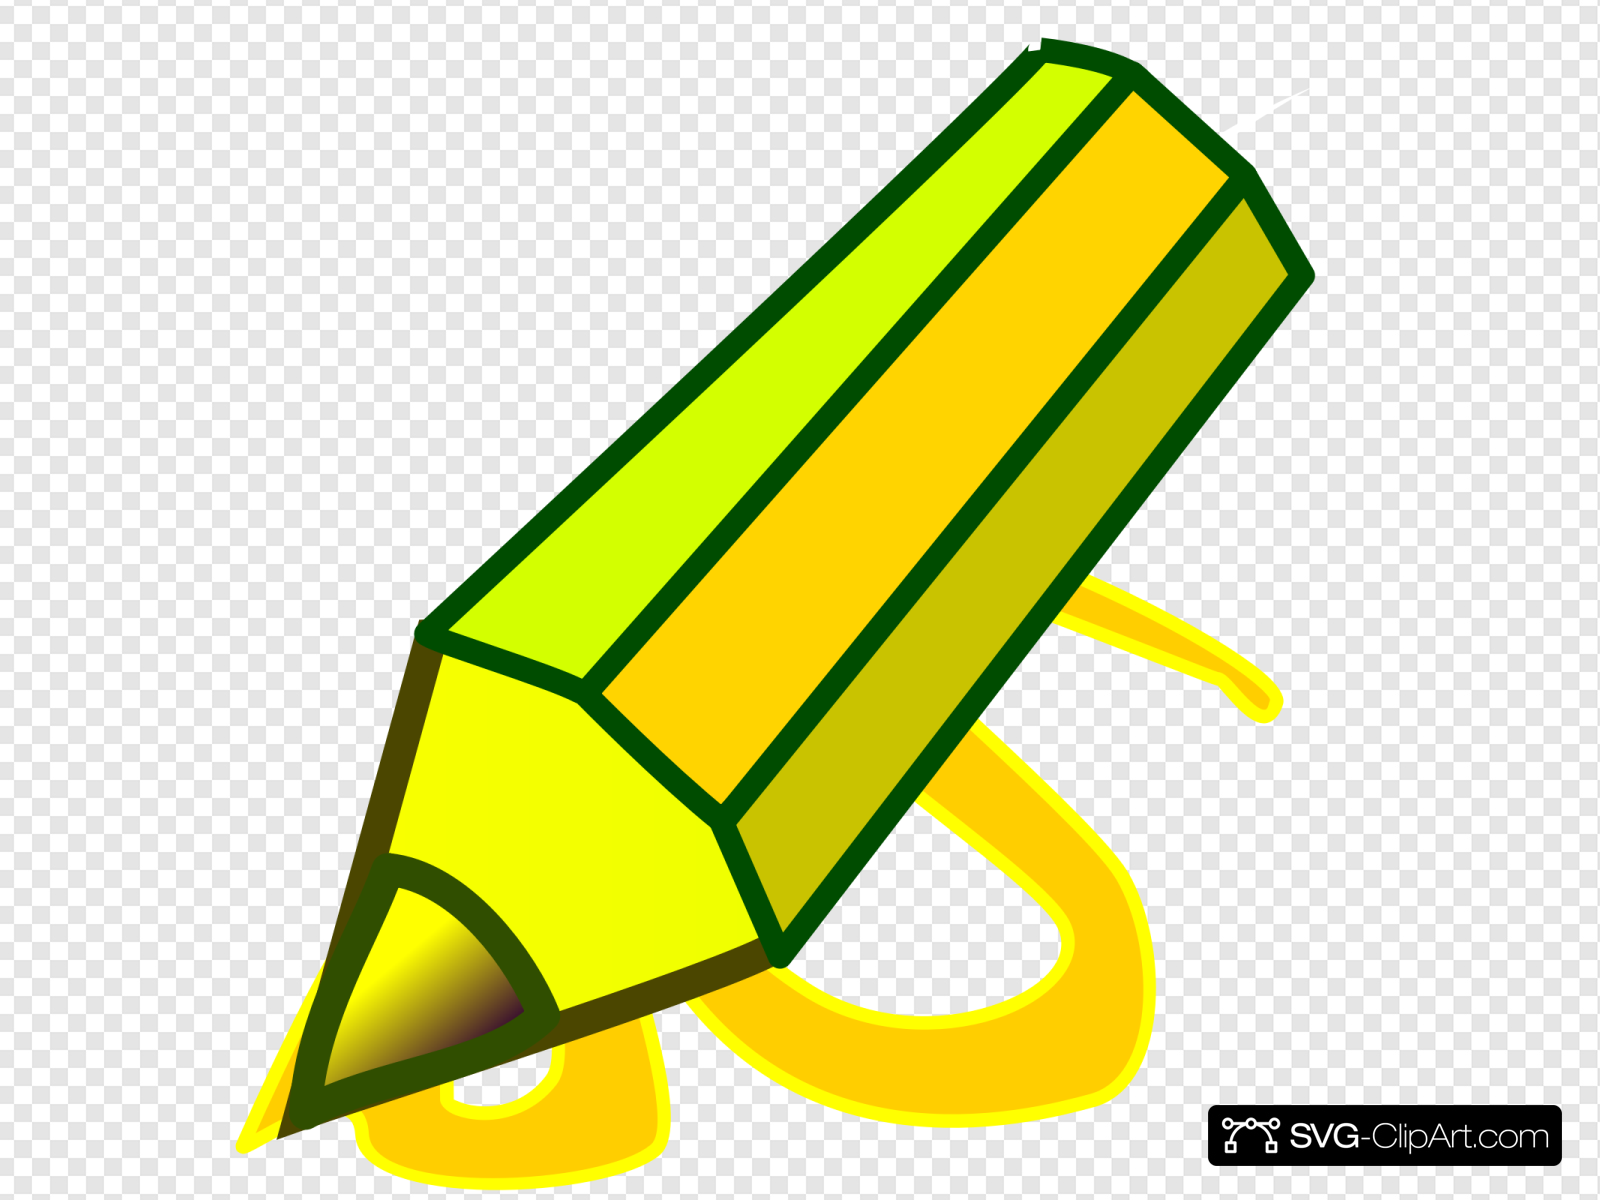 Yellow Pencil Clip art, Icon and SVG